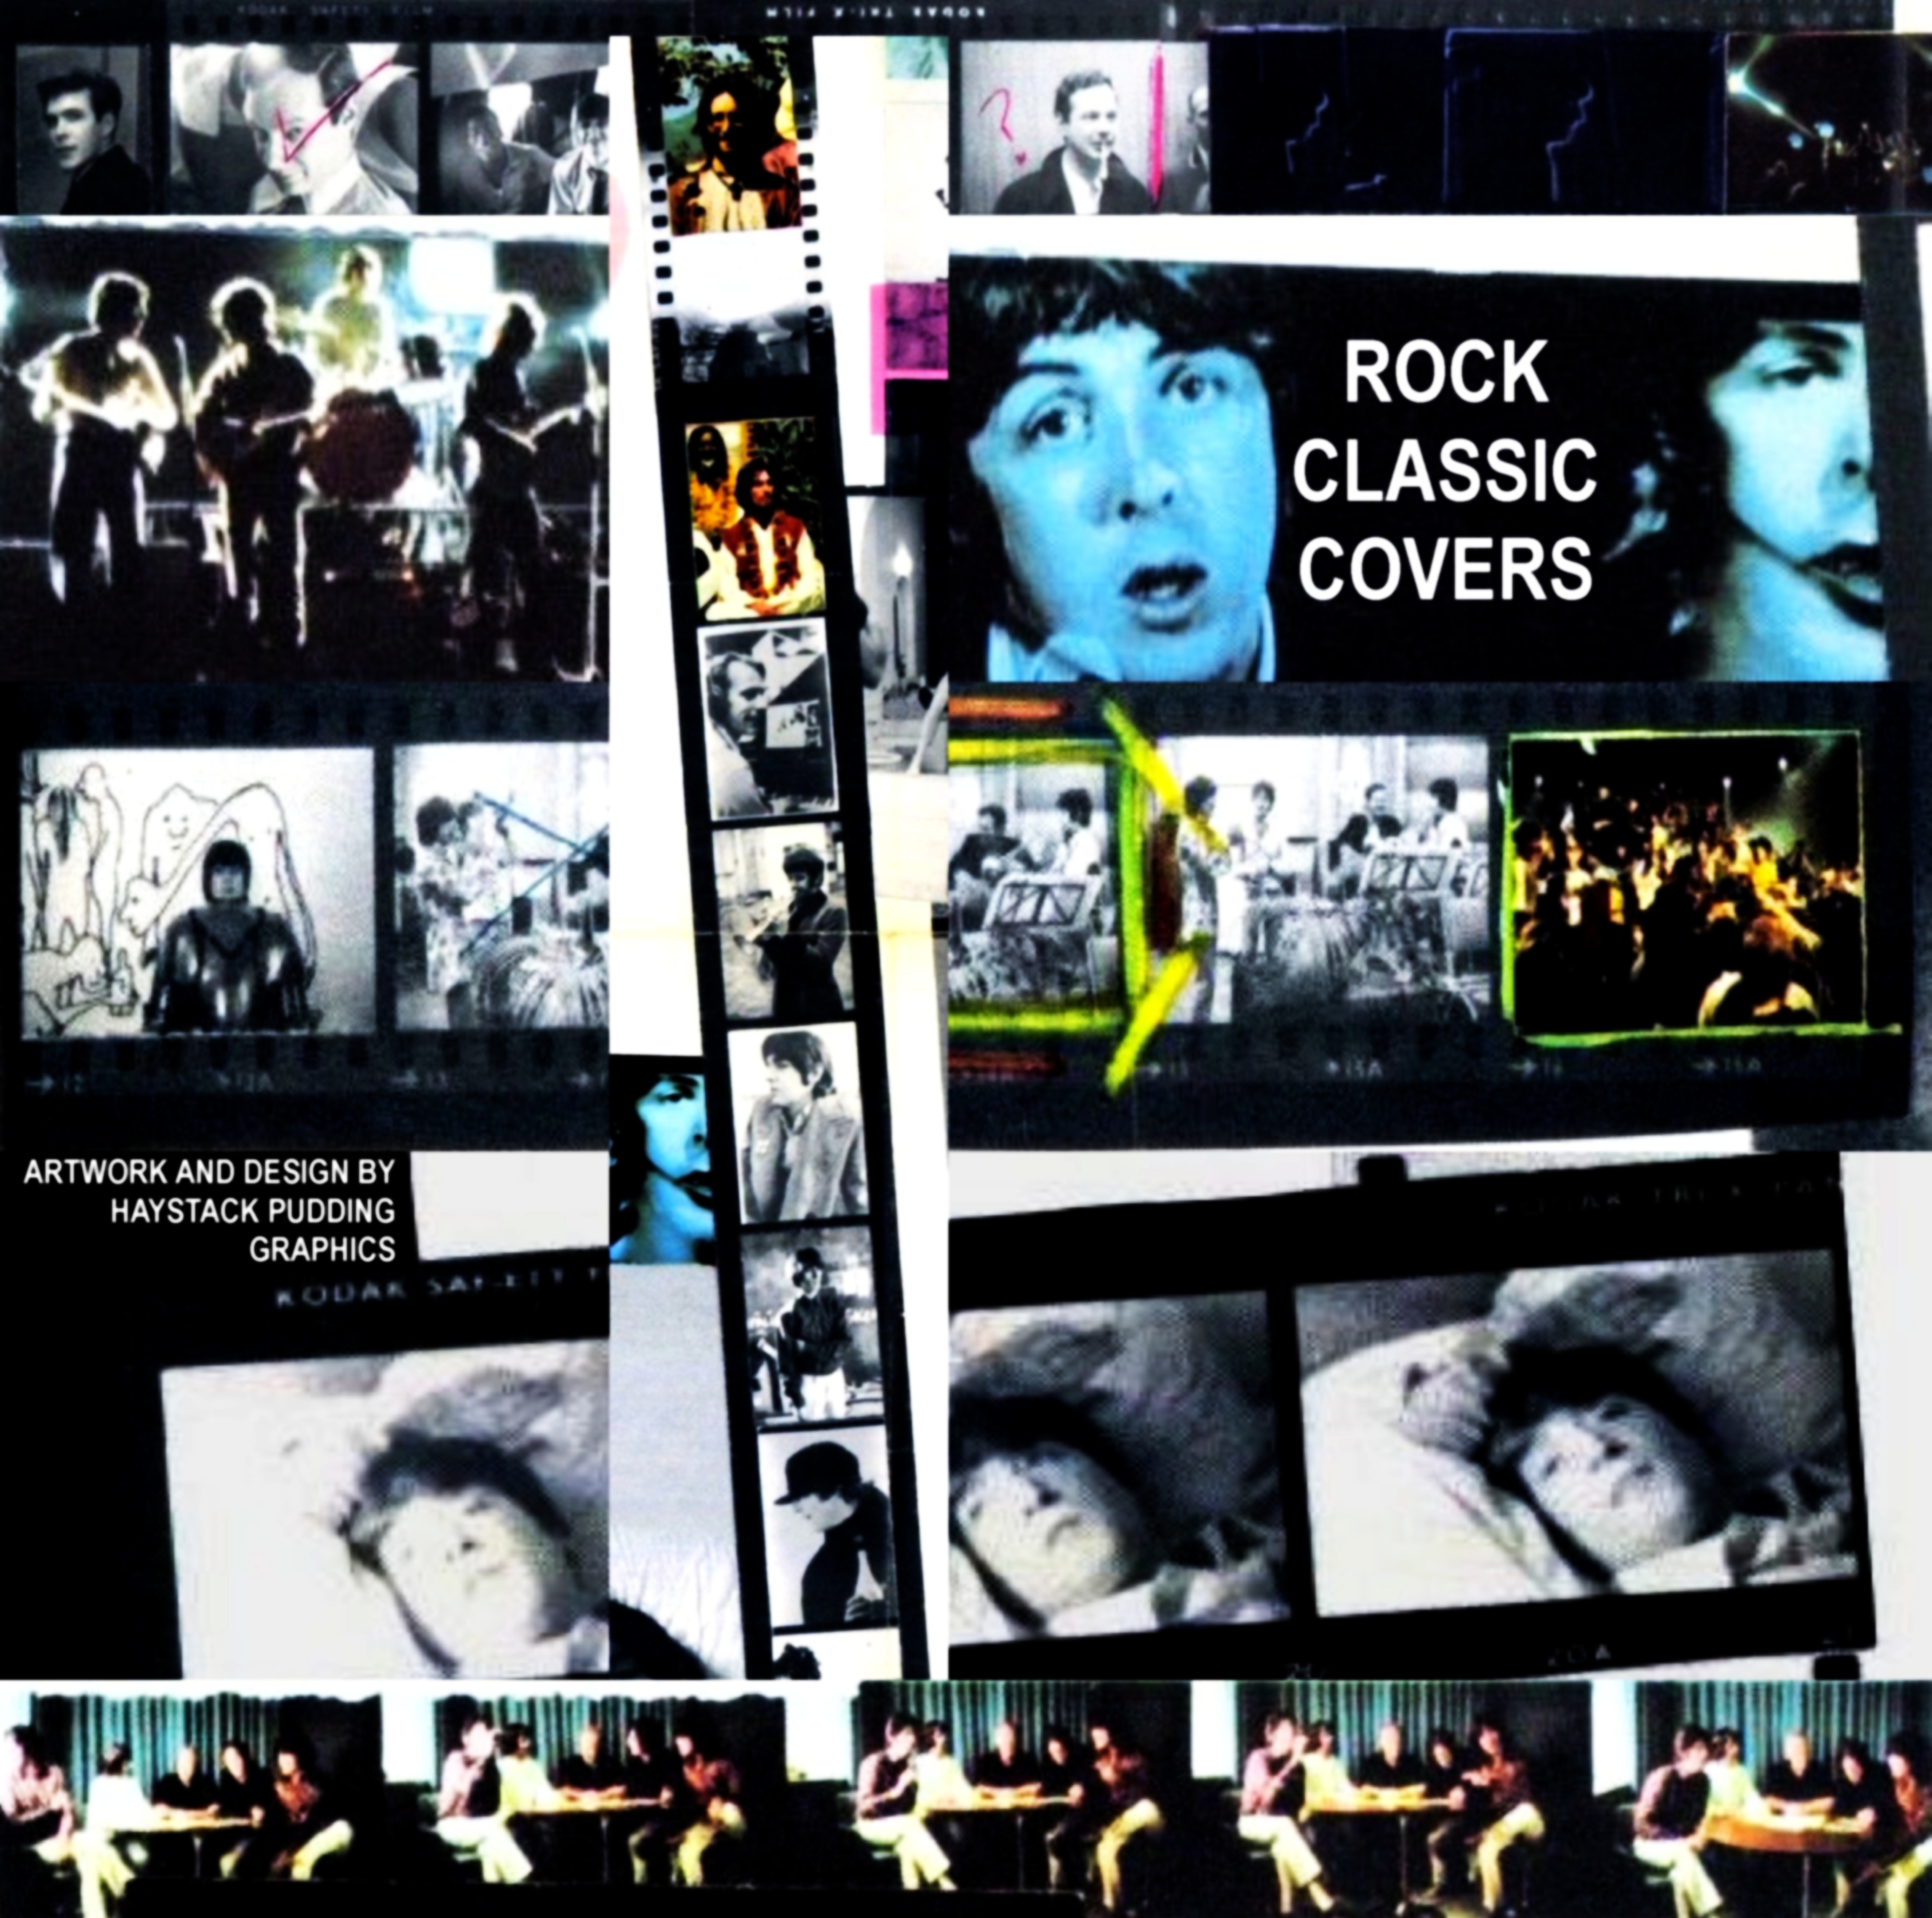 RockClassicsCoversVol14TheBeatlesTheWhiteAlbum (5).jpg